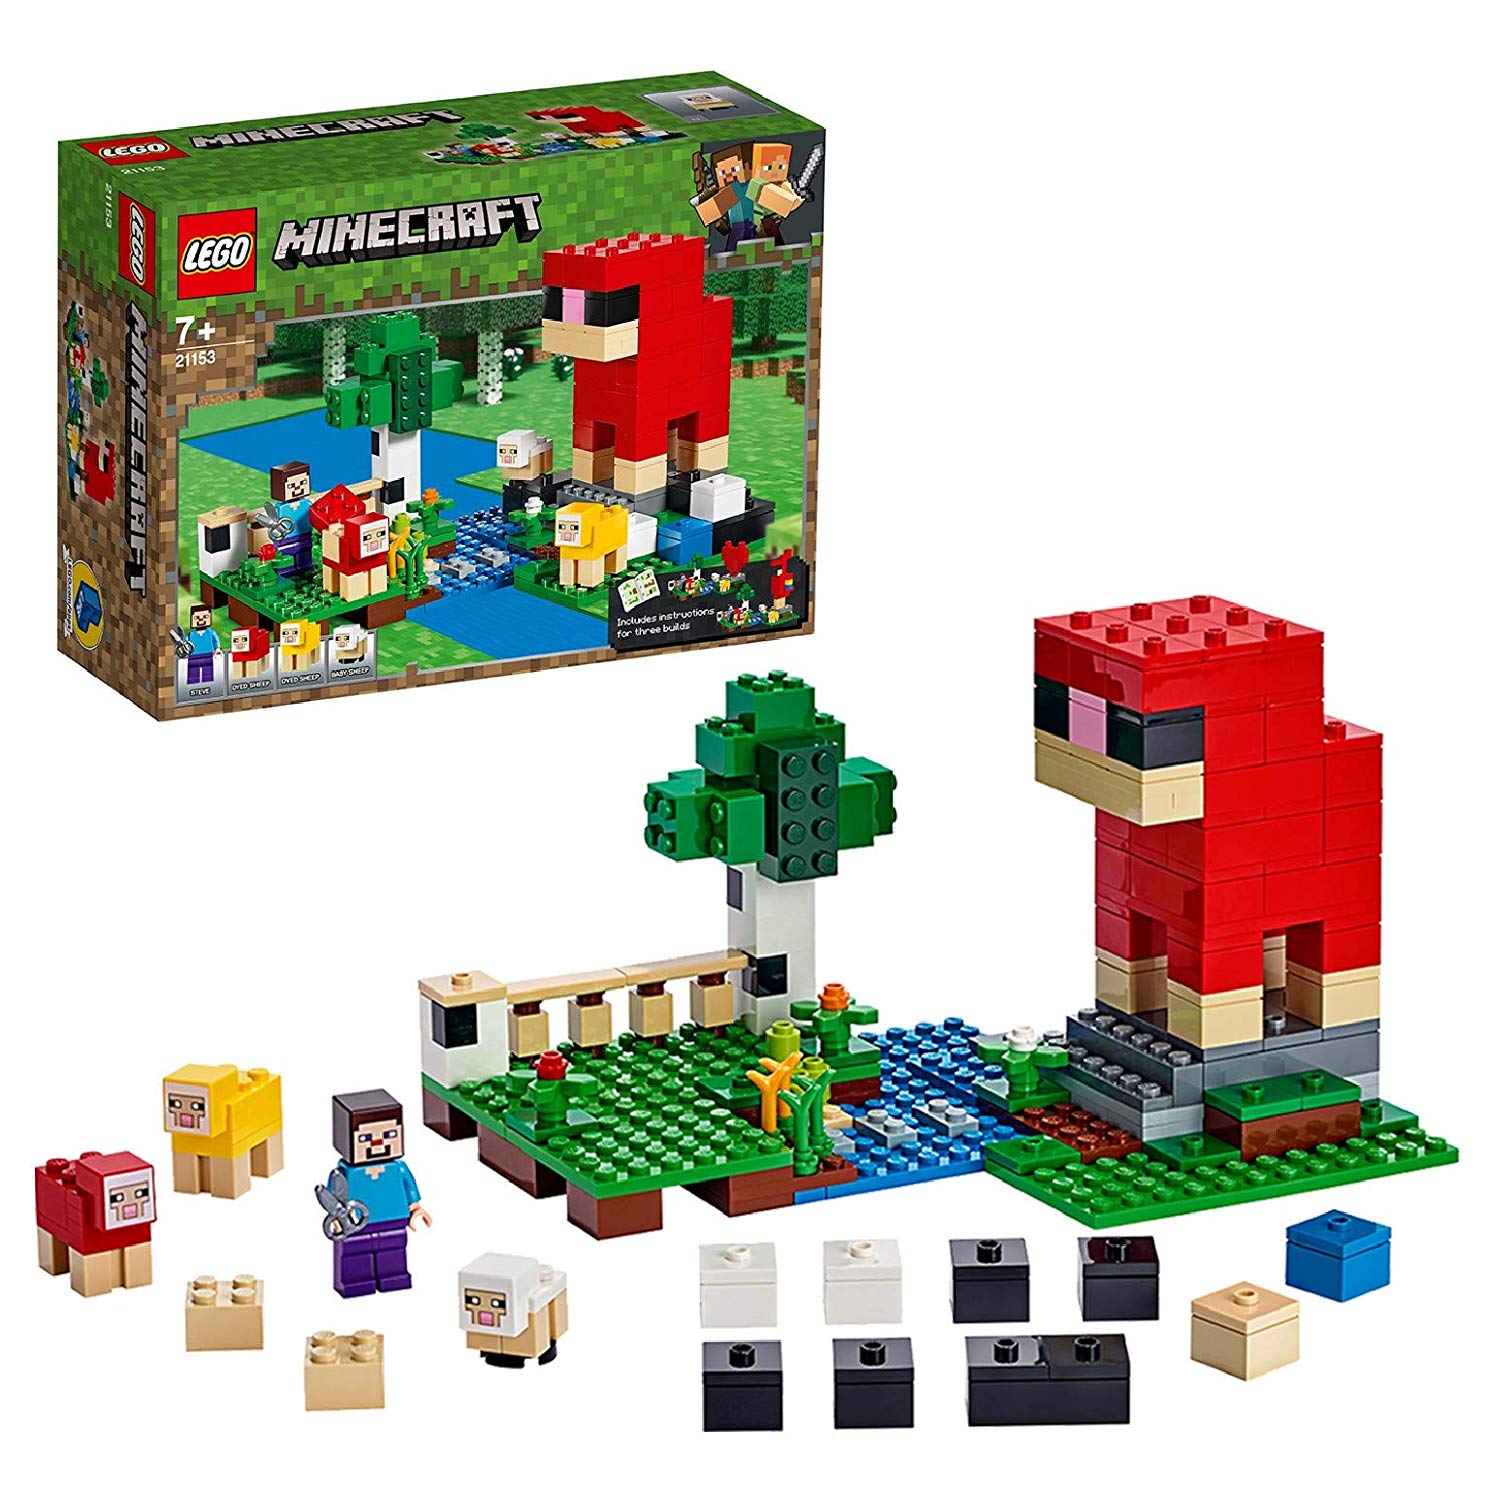 Lego Minecraft 21153 - The Sheep Arm Building Kit